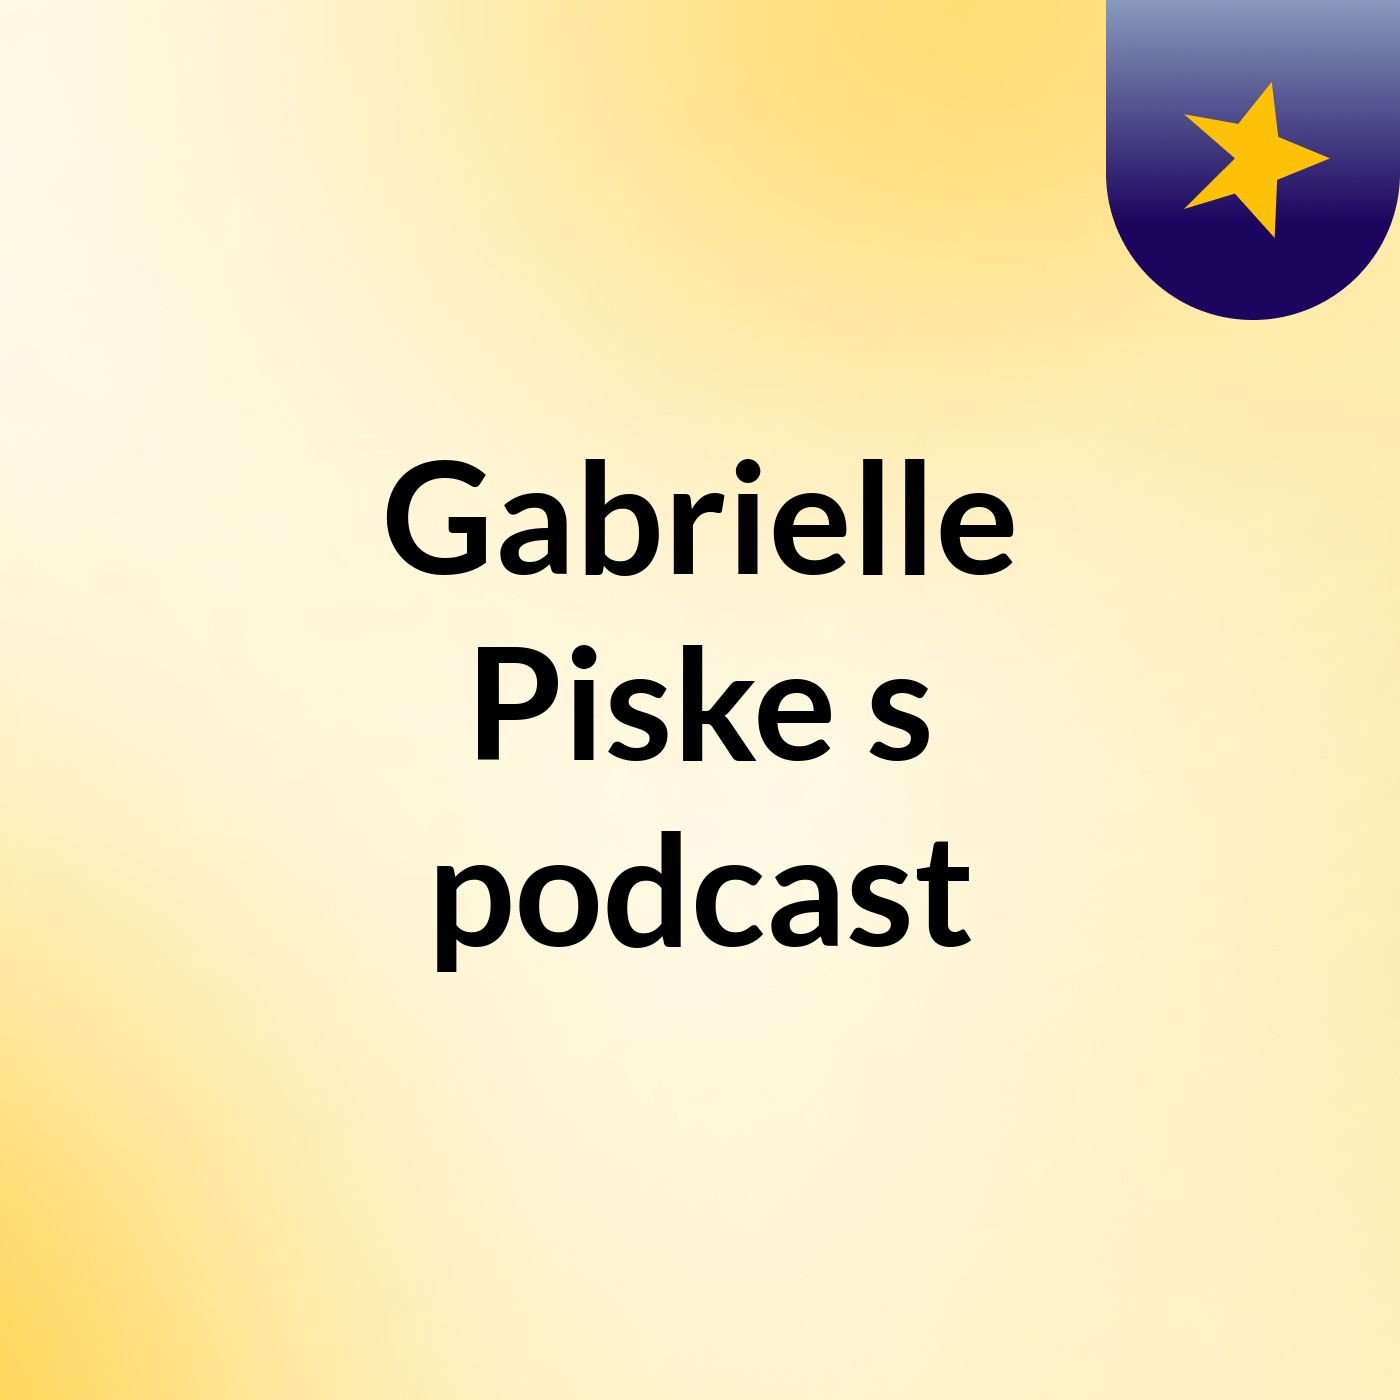 Gabrielle Piske's podcast